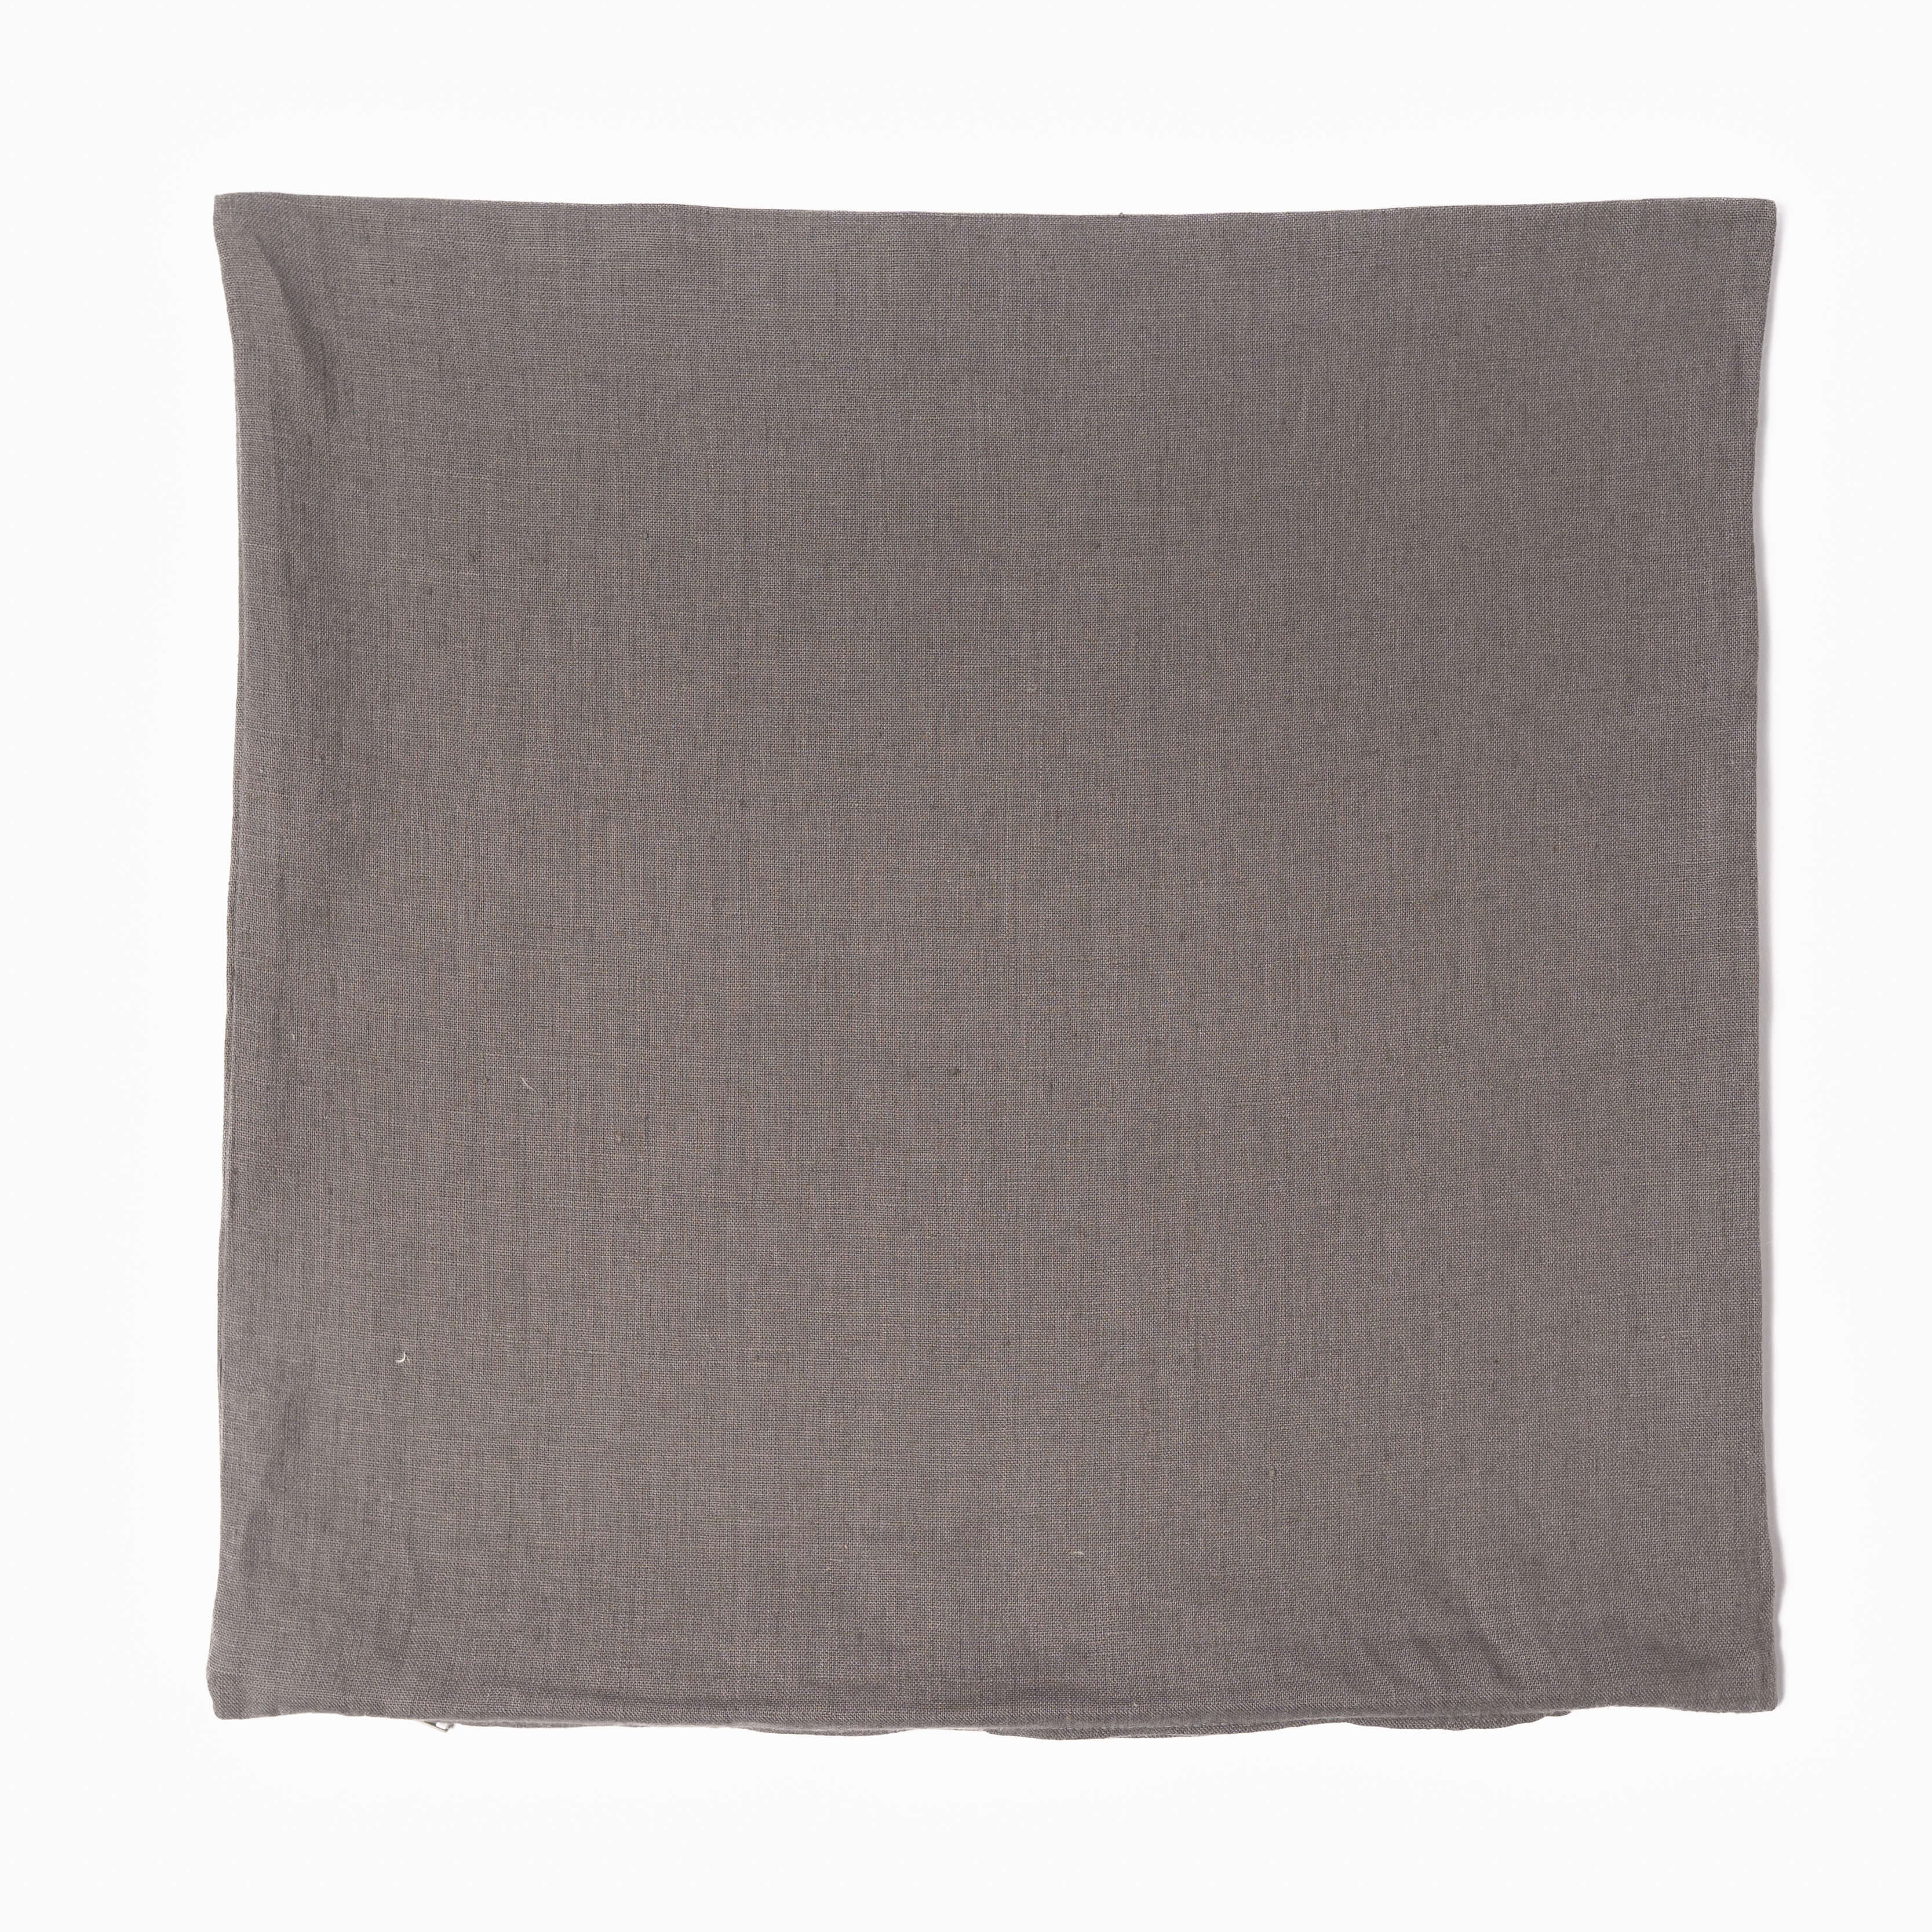 Graphite Grey Linen Cushion Cover